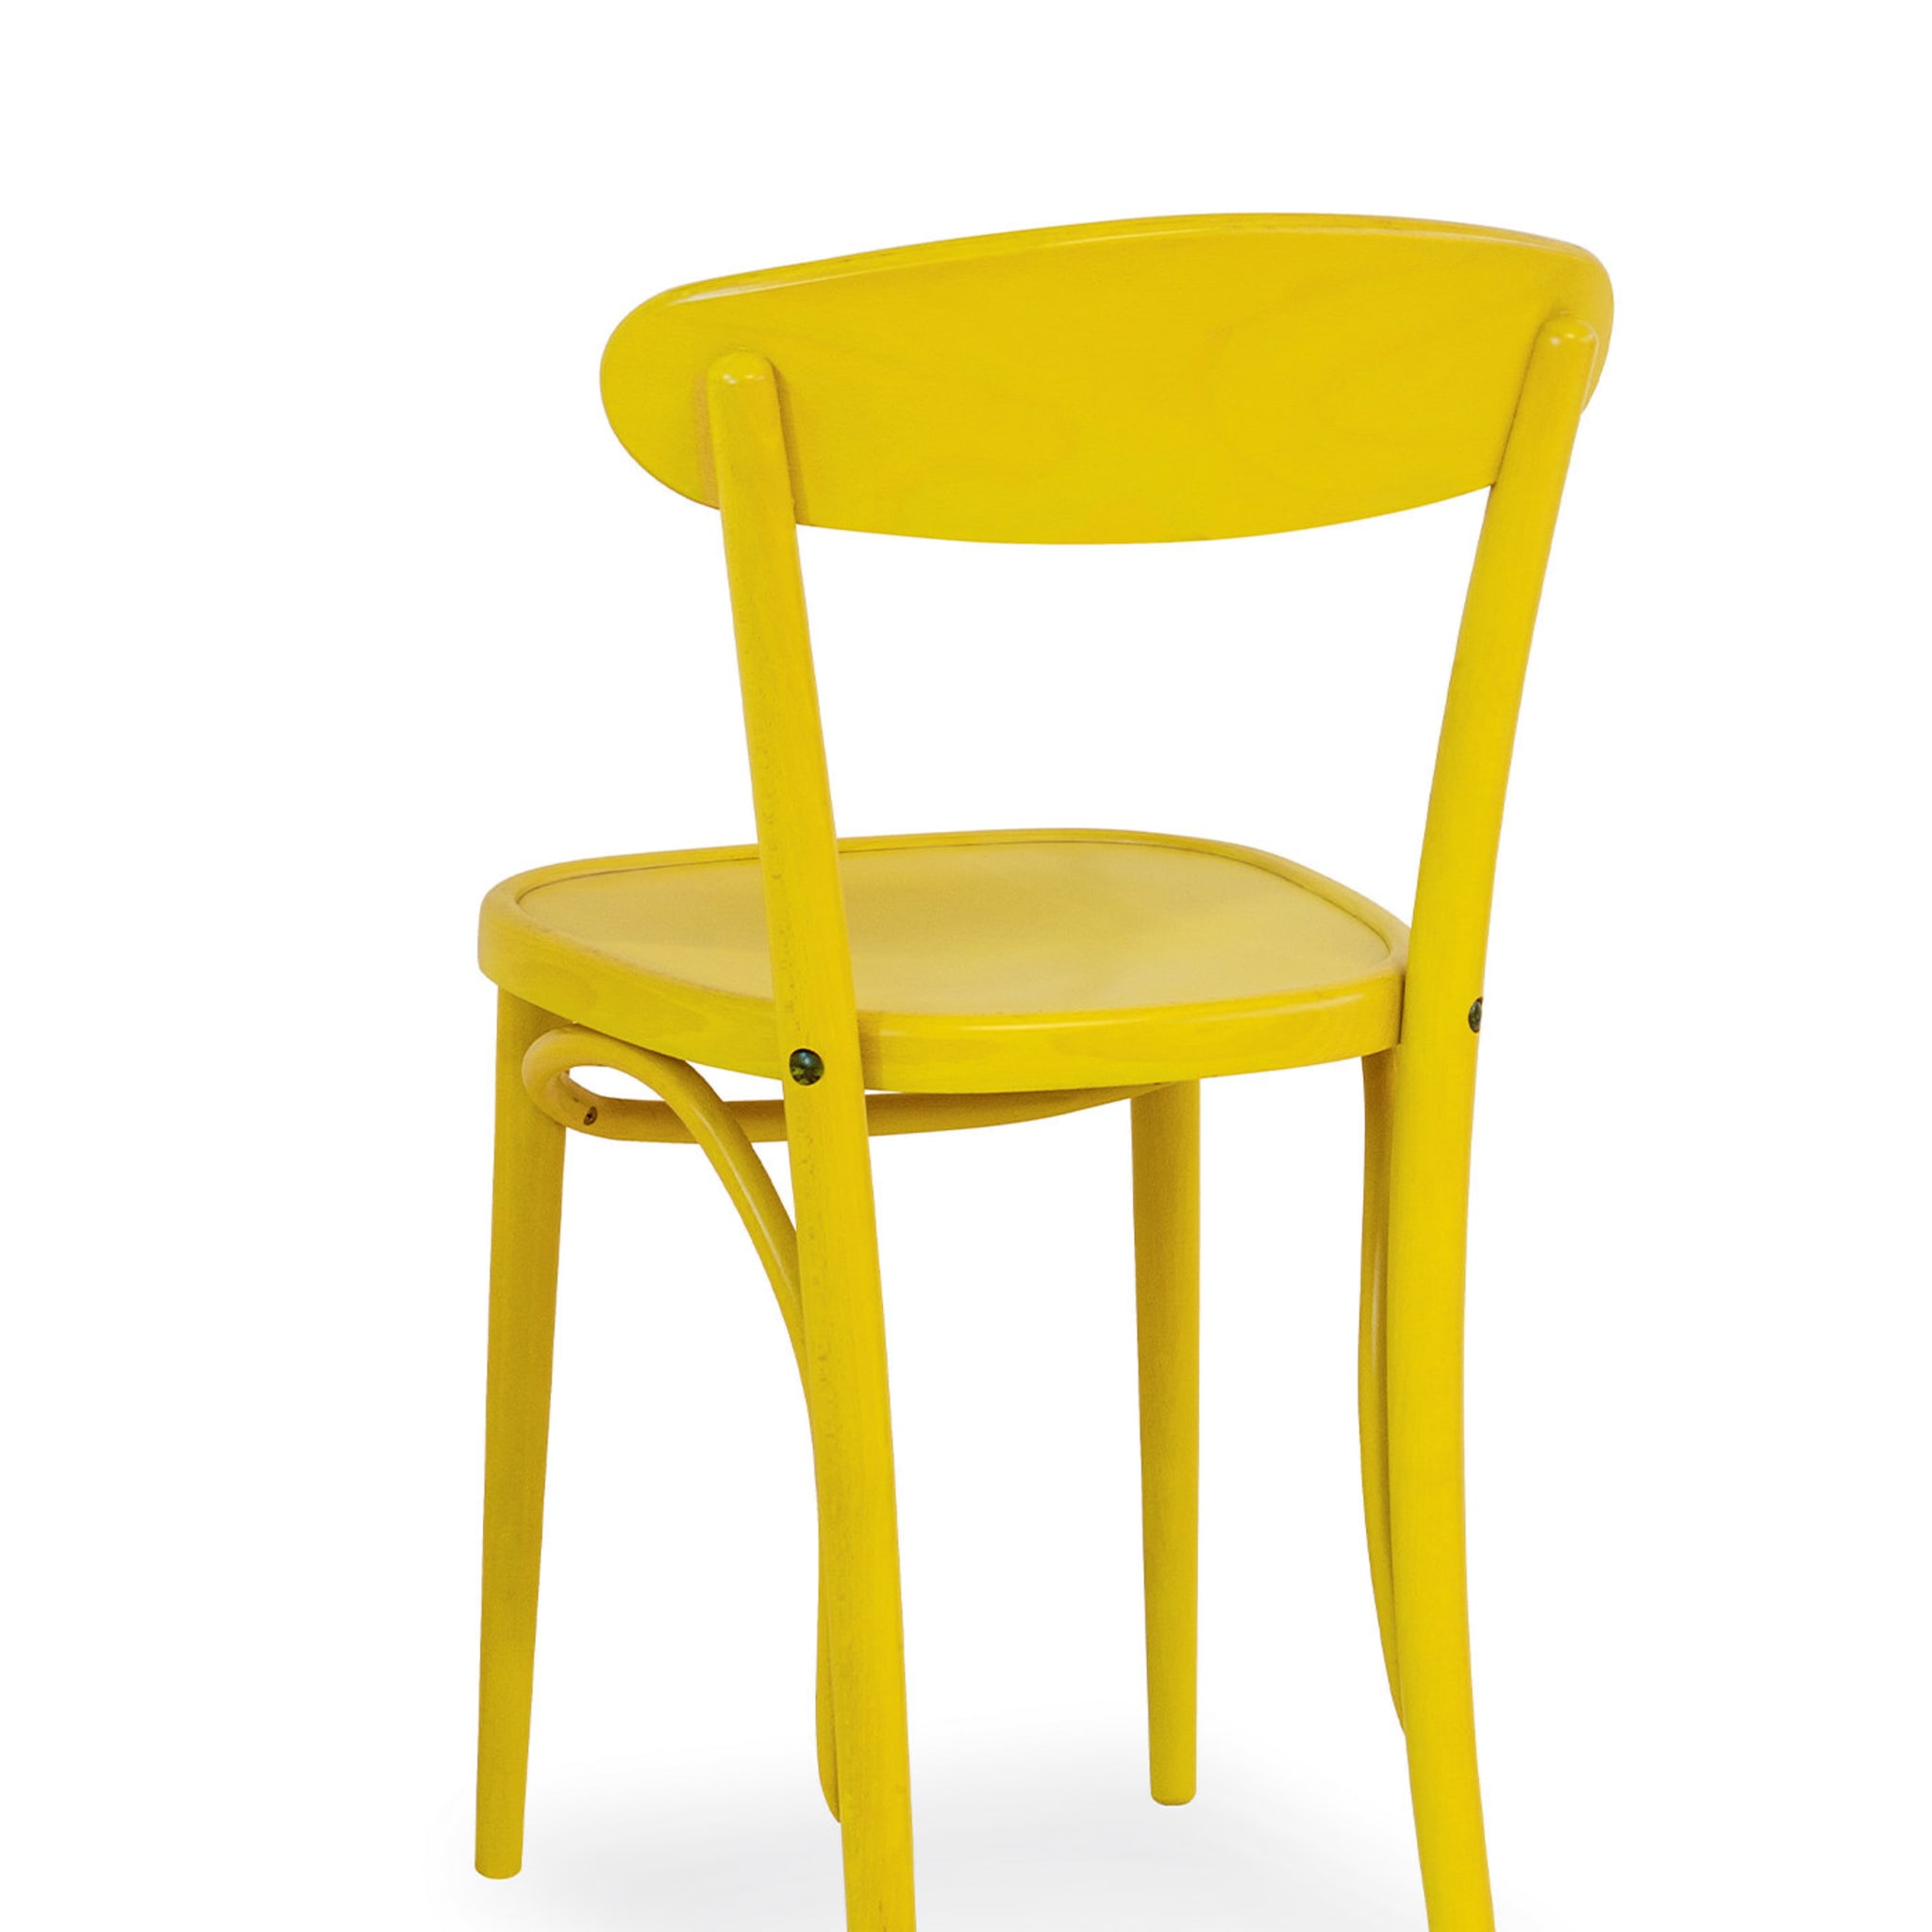 Patty Set of 2 Yellow Chairs - Alternative view 1